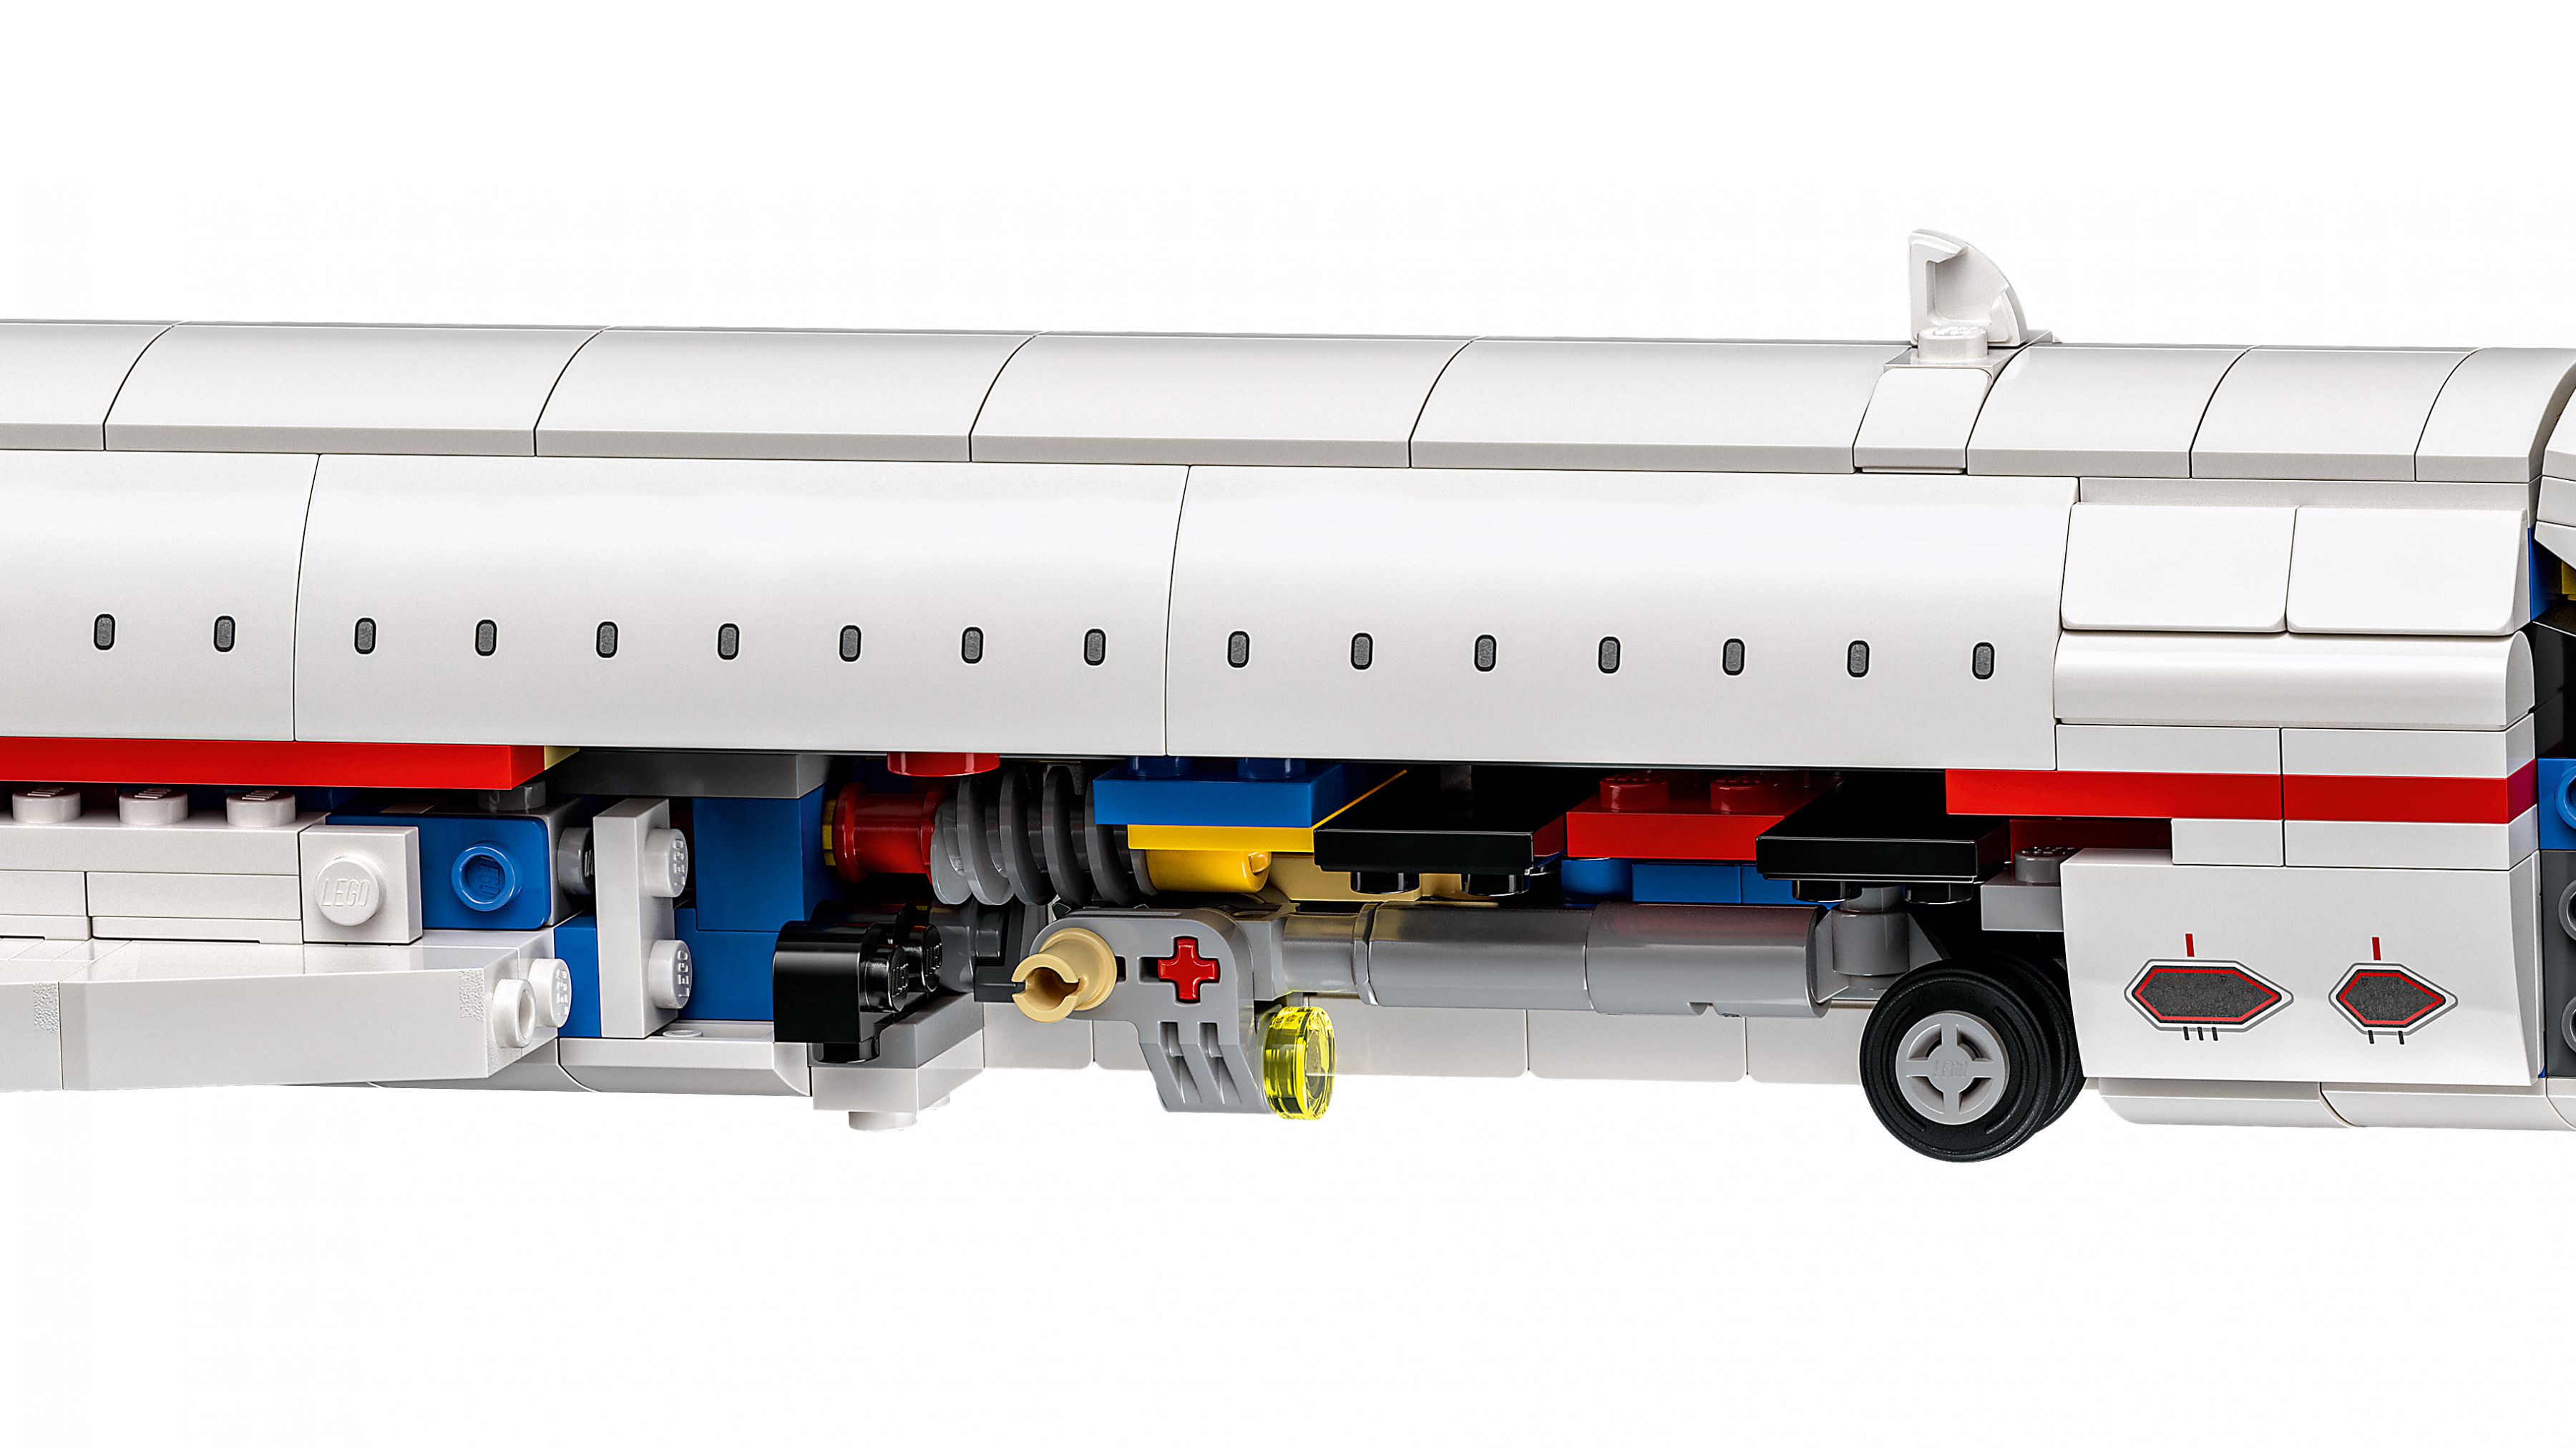 LEGO Advanced Models 10318 Concorde LEGO_10318_WEB_SEC07_NOBG.jpg